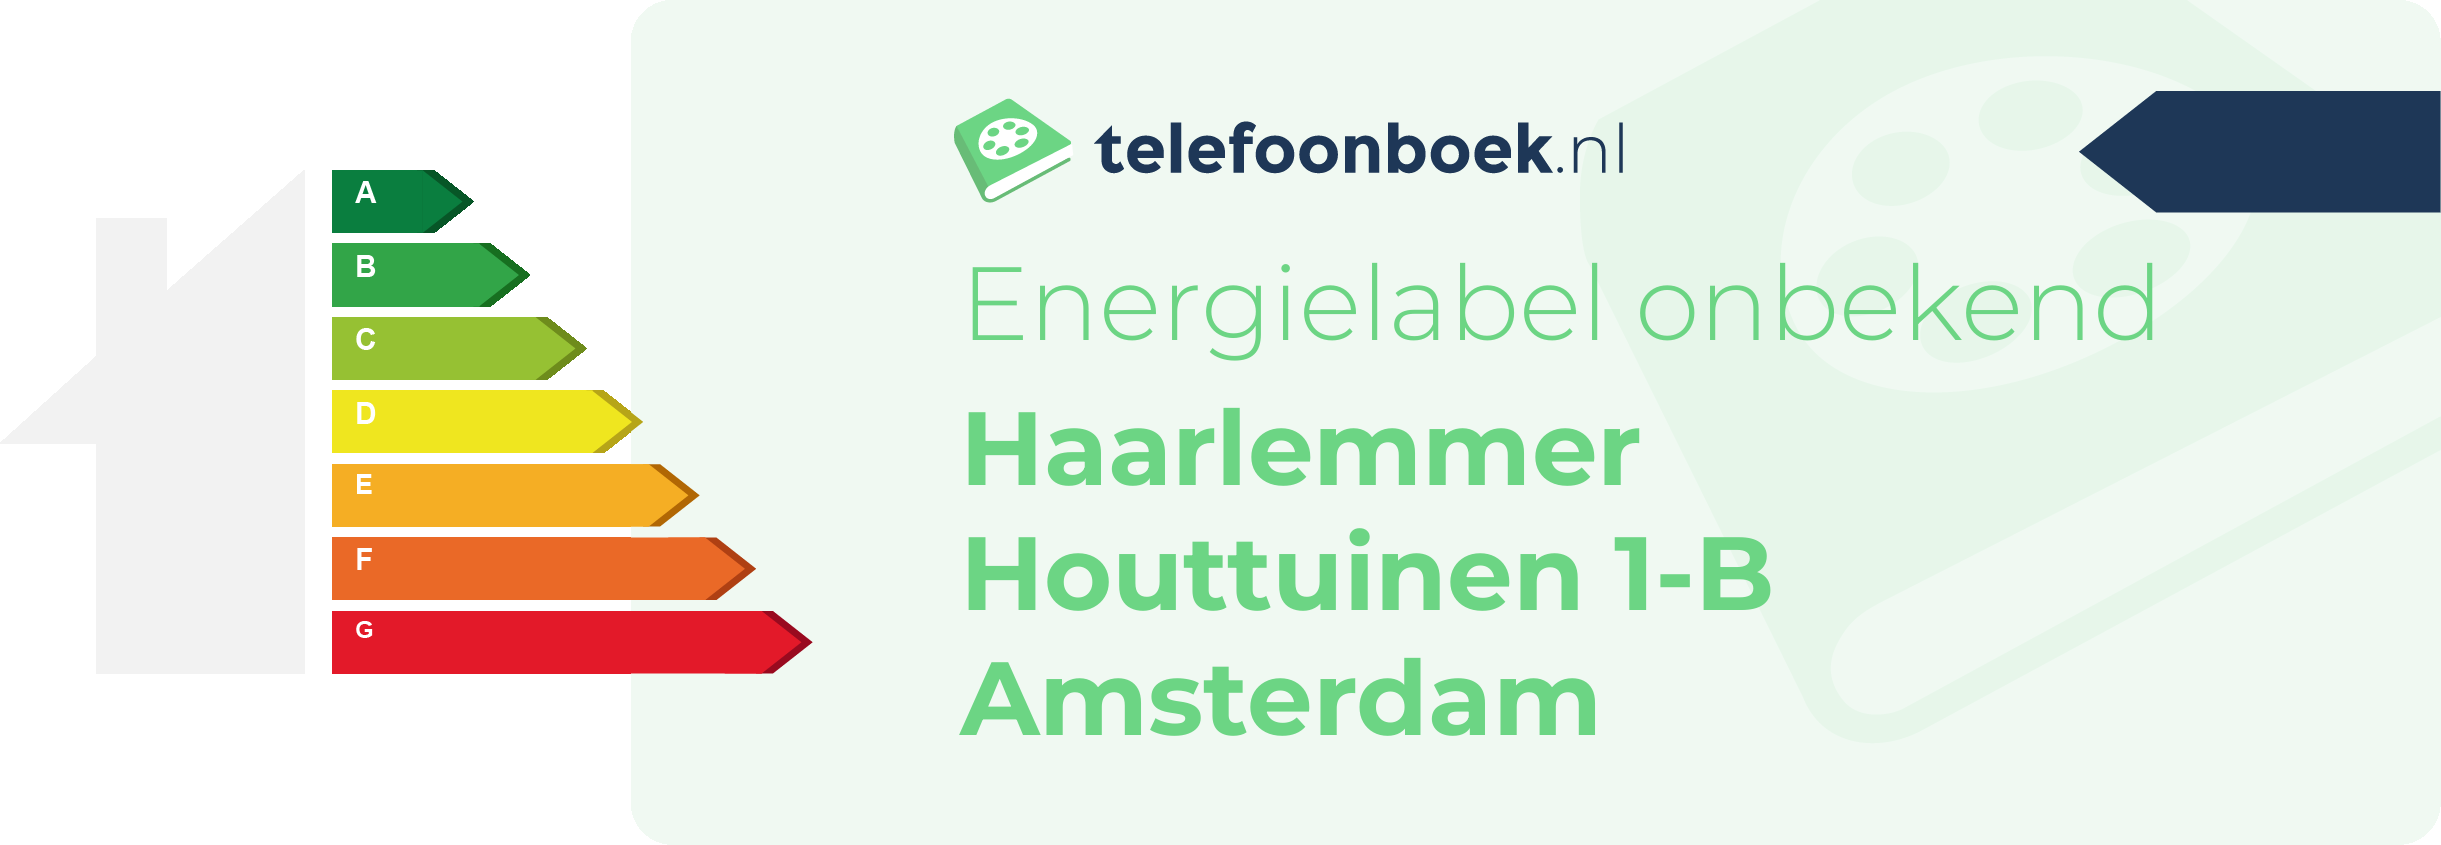 Energielabel Haarlemmer Houttuinen 1-B Amsterdam